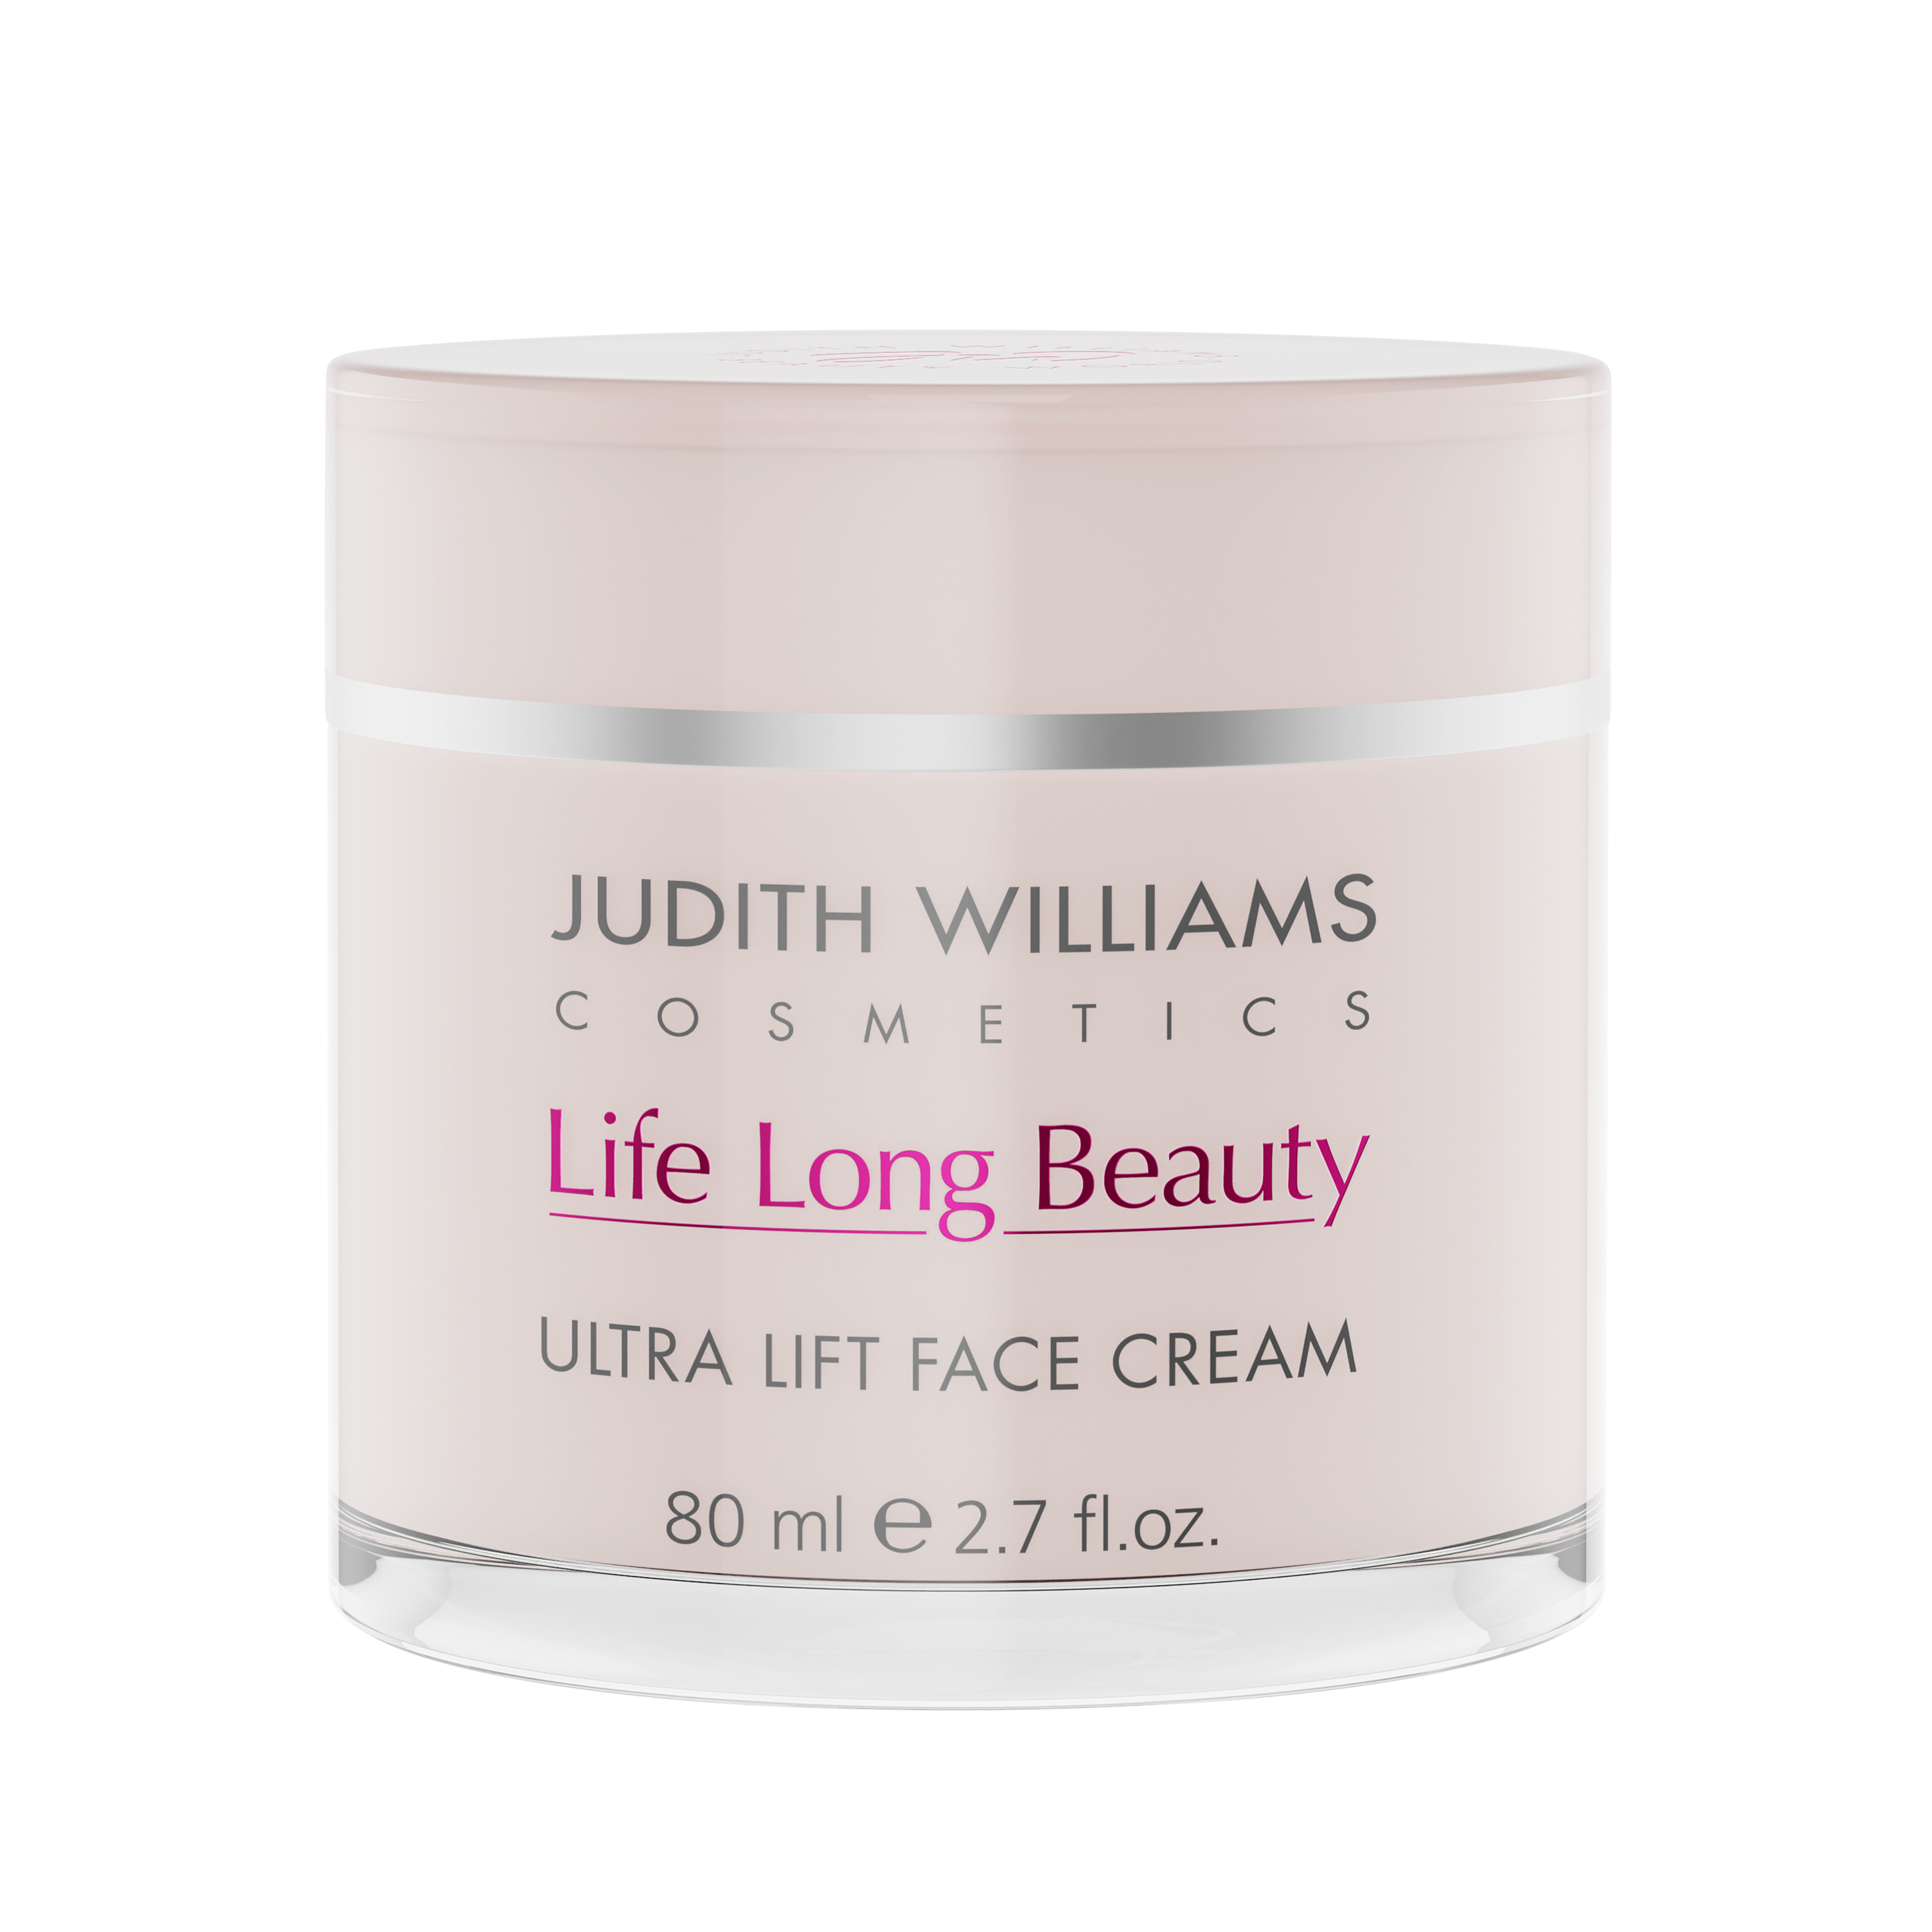 Life Long Beauty Ultra Lift Face Cream